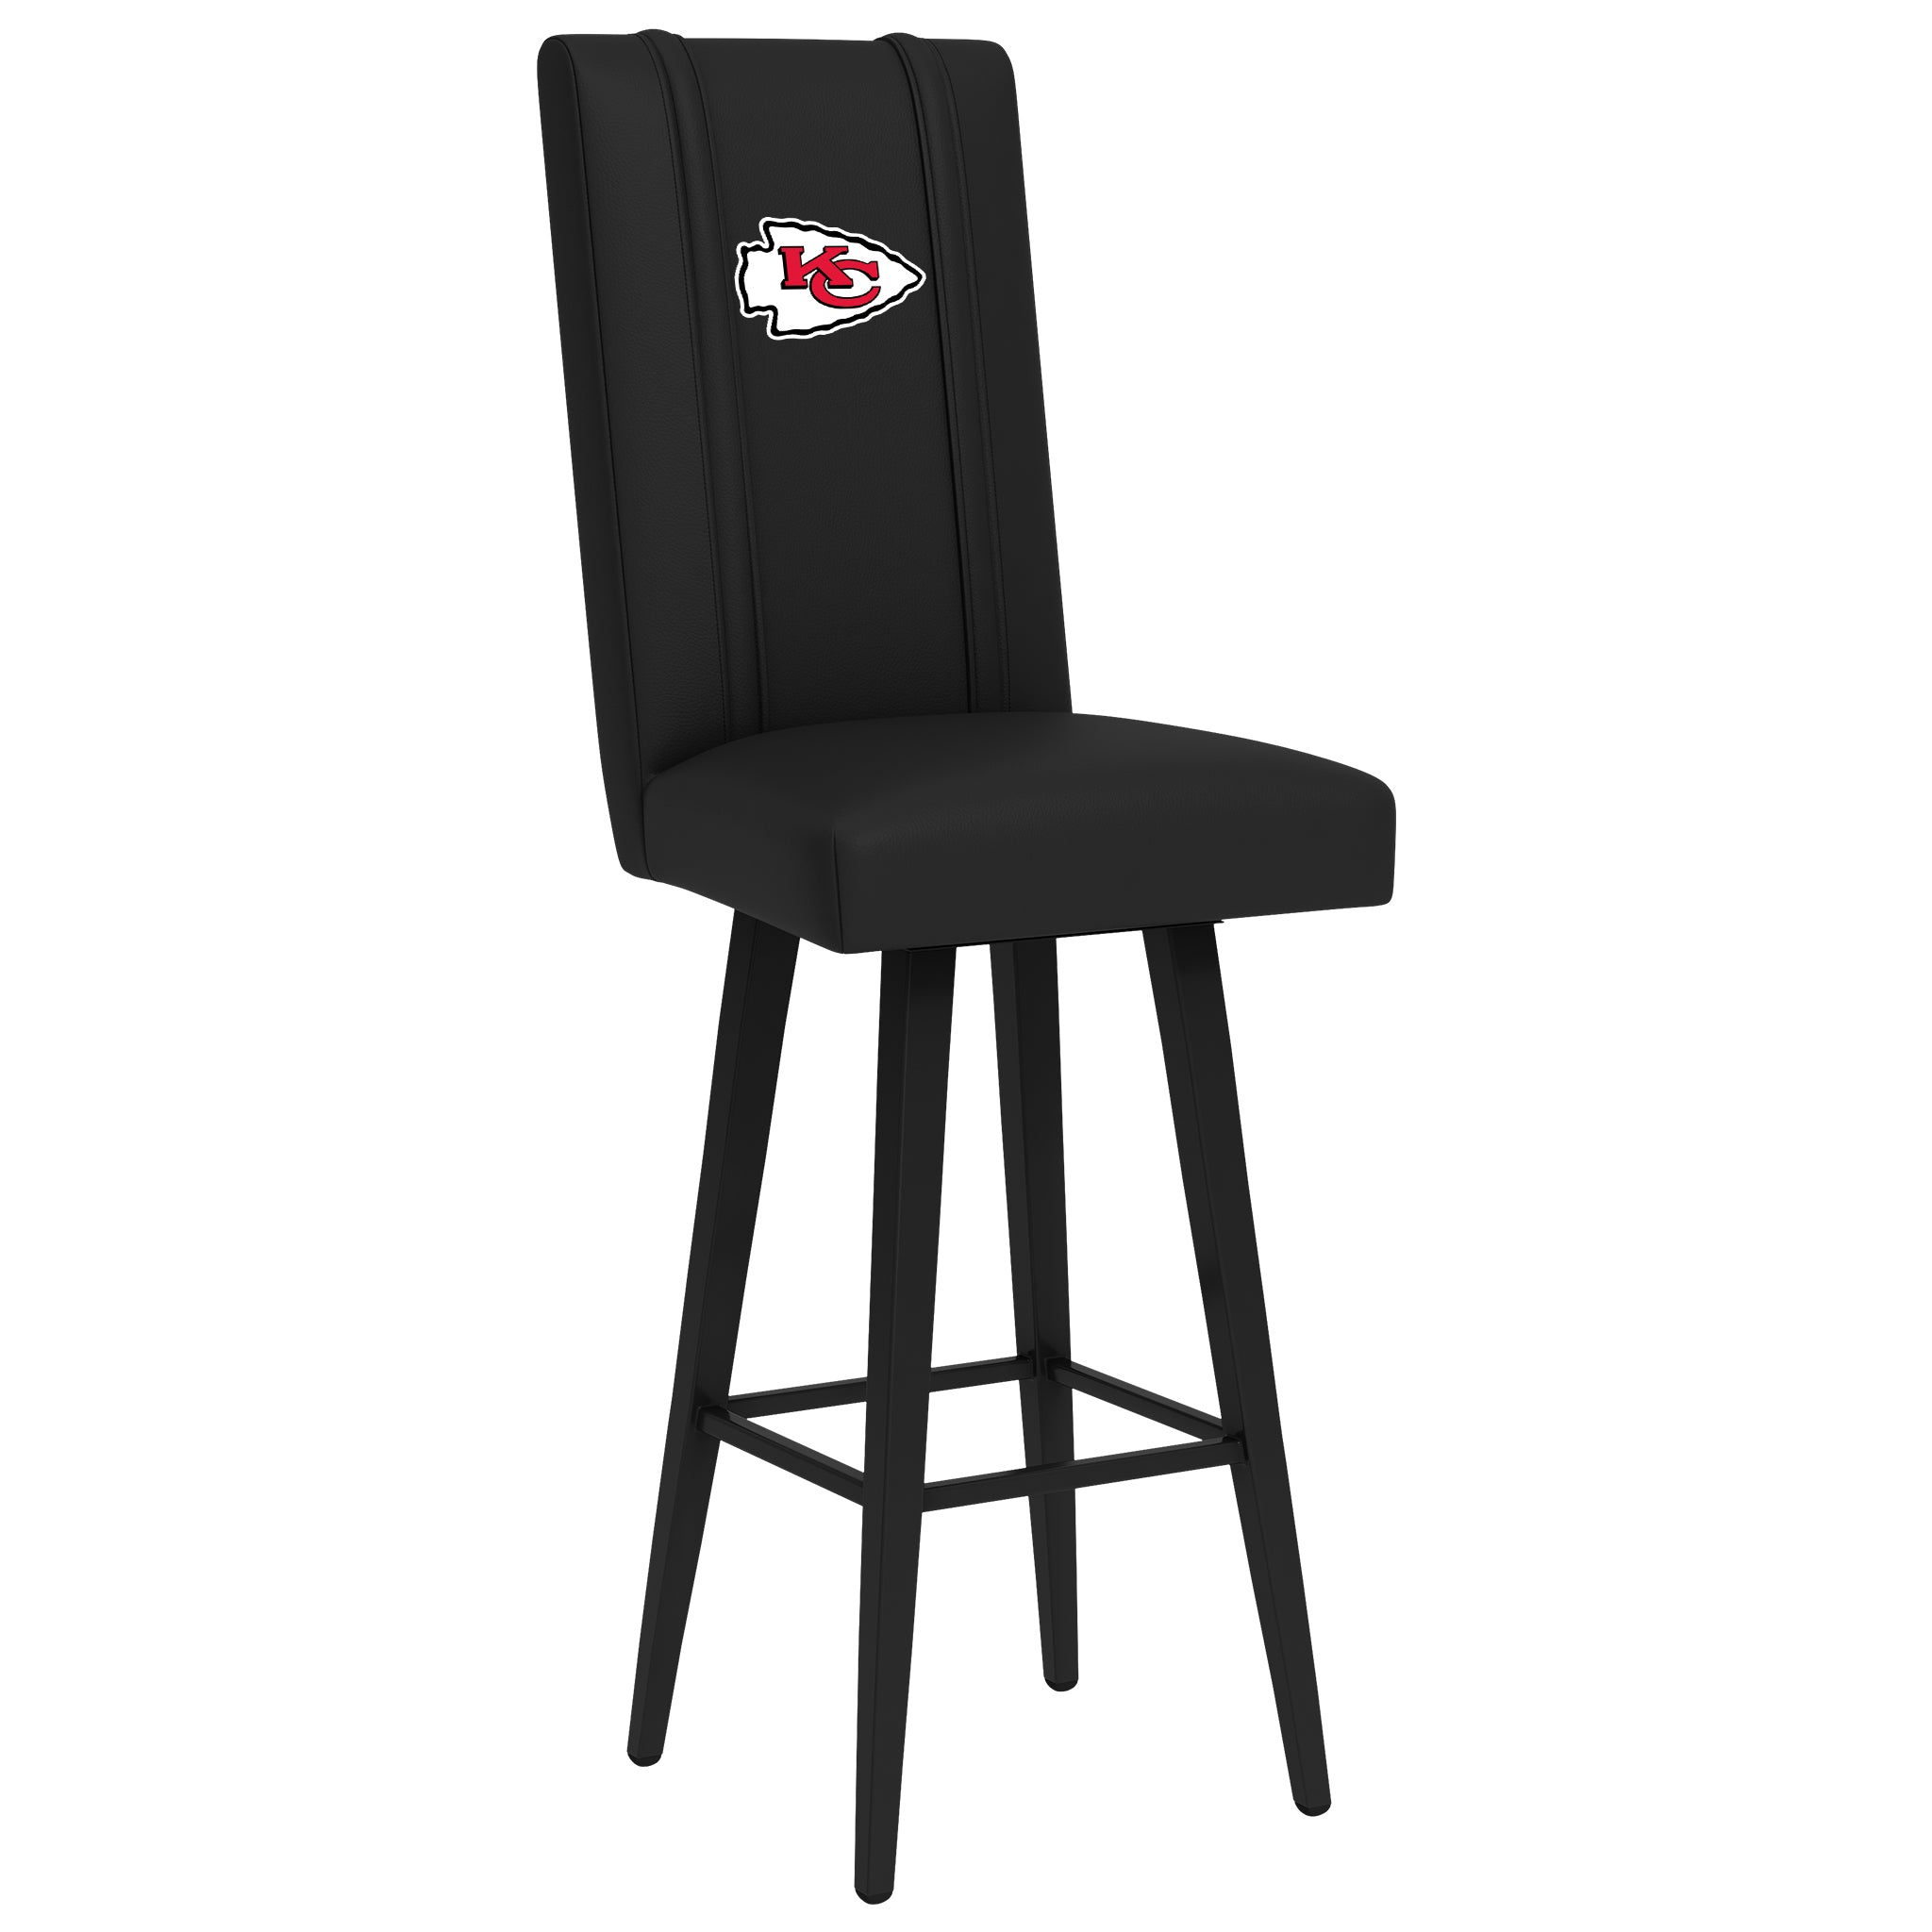 Kansas City Chiefs Swivel Bar Stool - Chair - Furniture - Kitchen